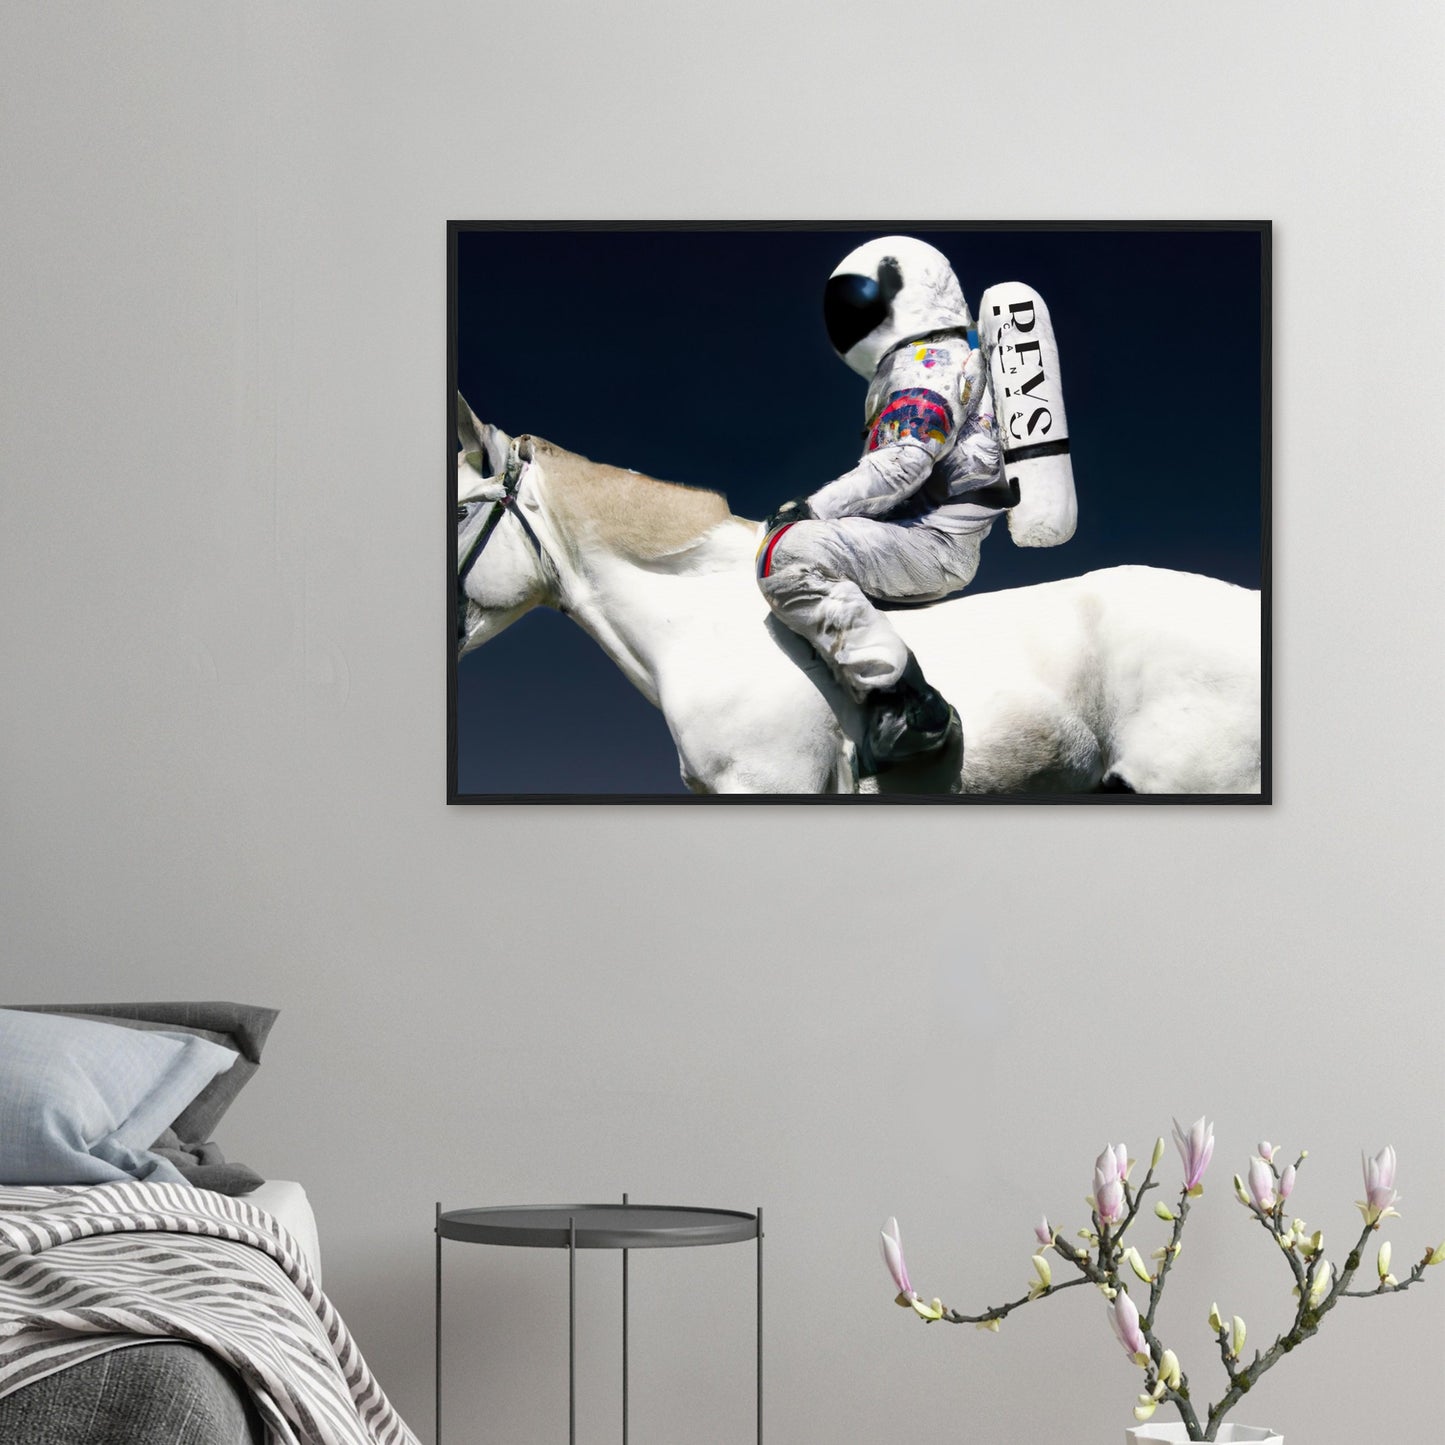 "Astronaut riding a Horse" K.I-Kunst, Museum-Qualität Matt Papier Holz-Gerahmtes Poster